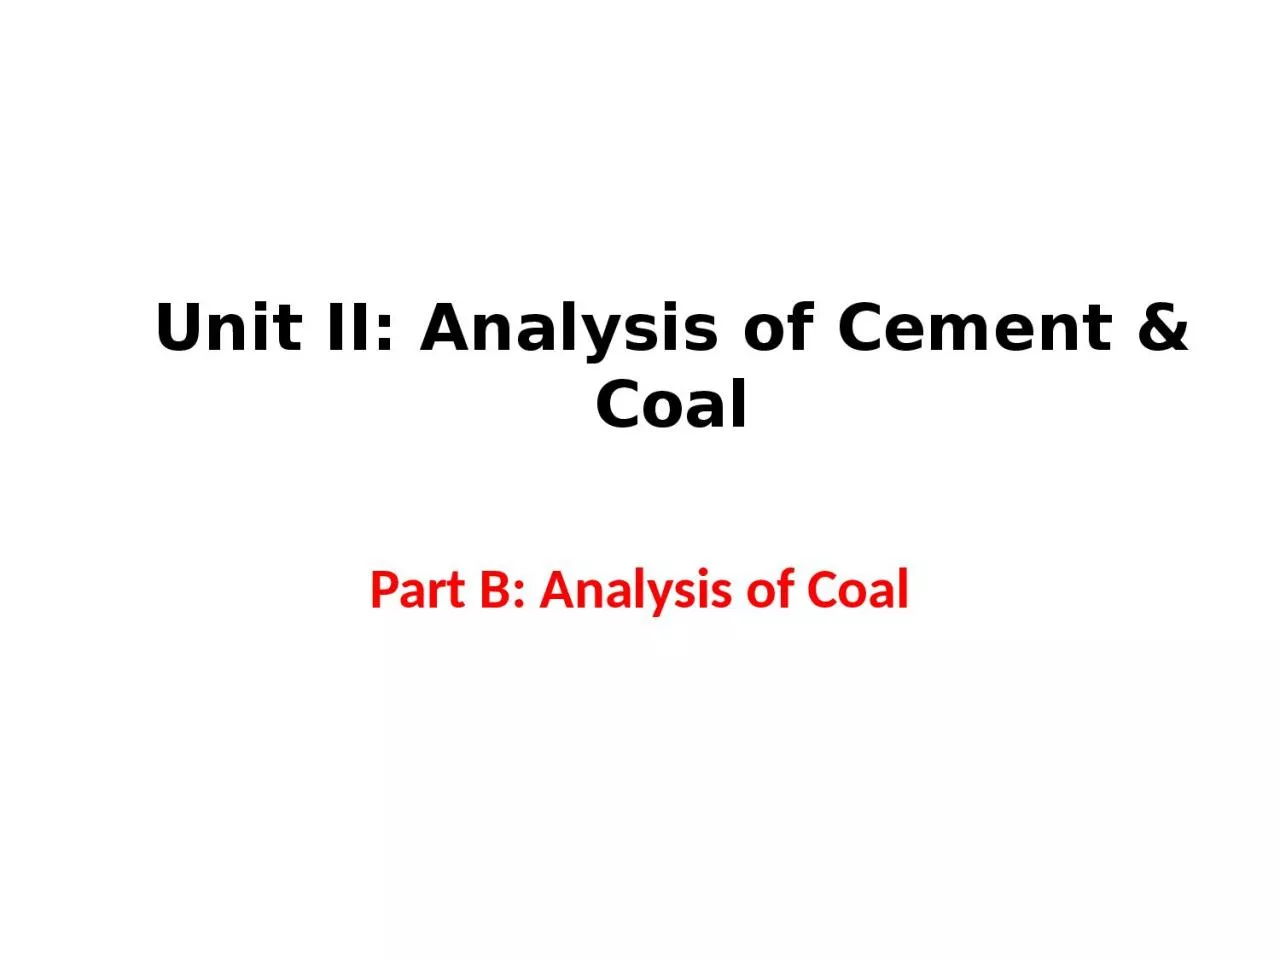 Unit II: Analysis of Cement & Coal